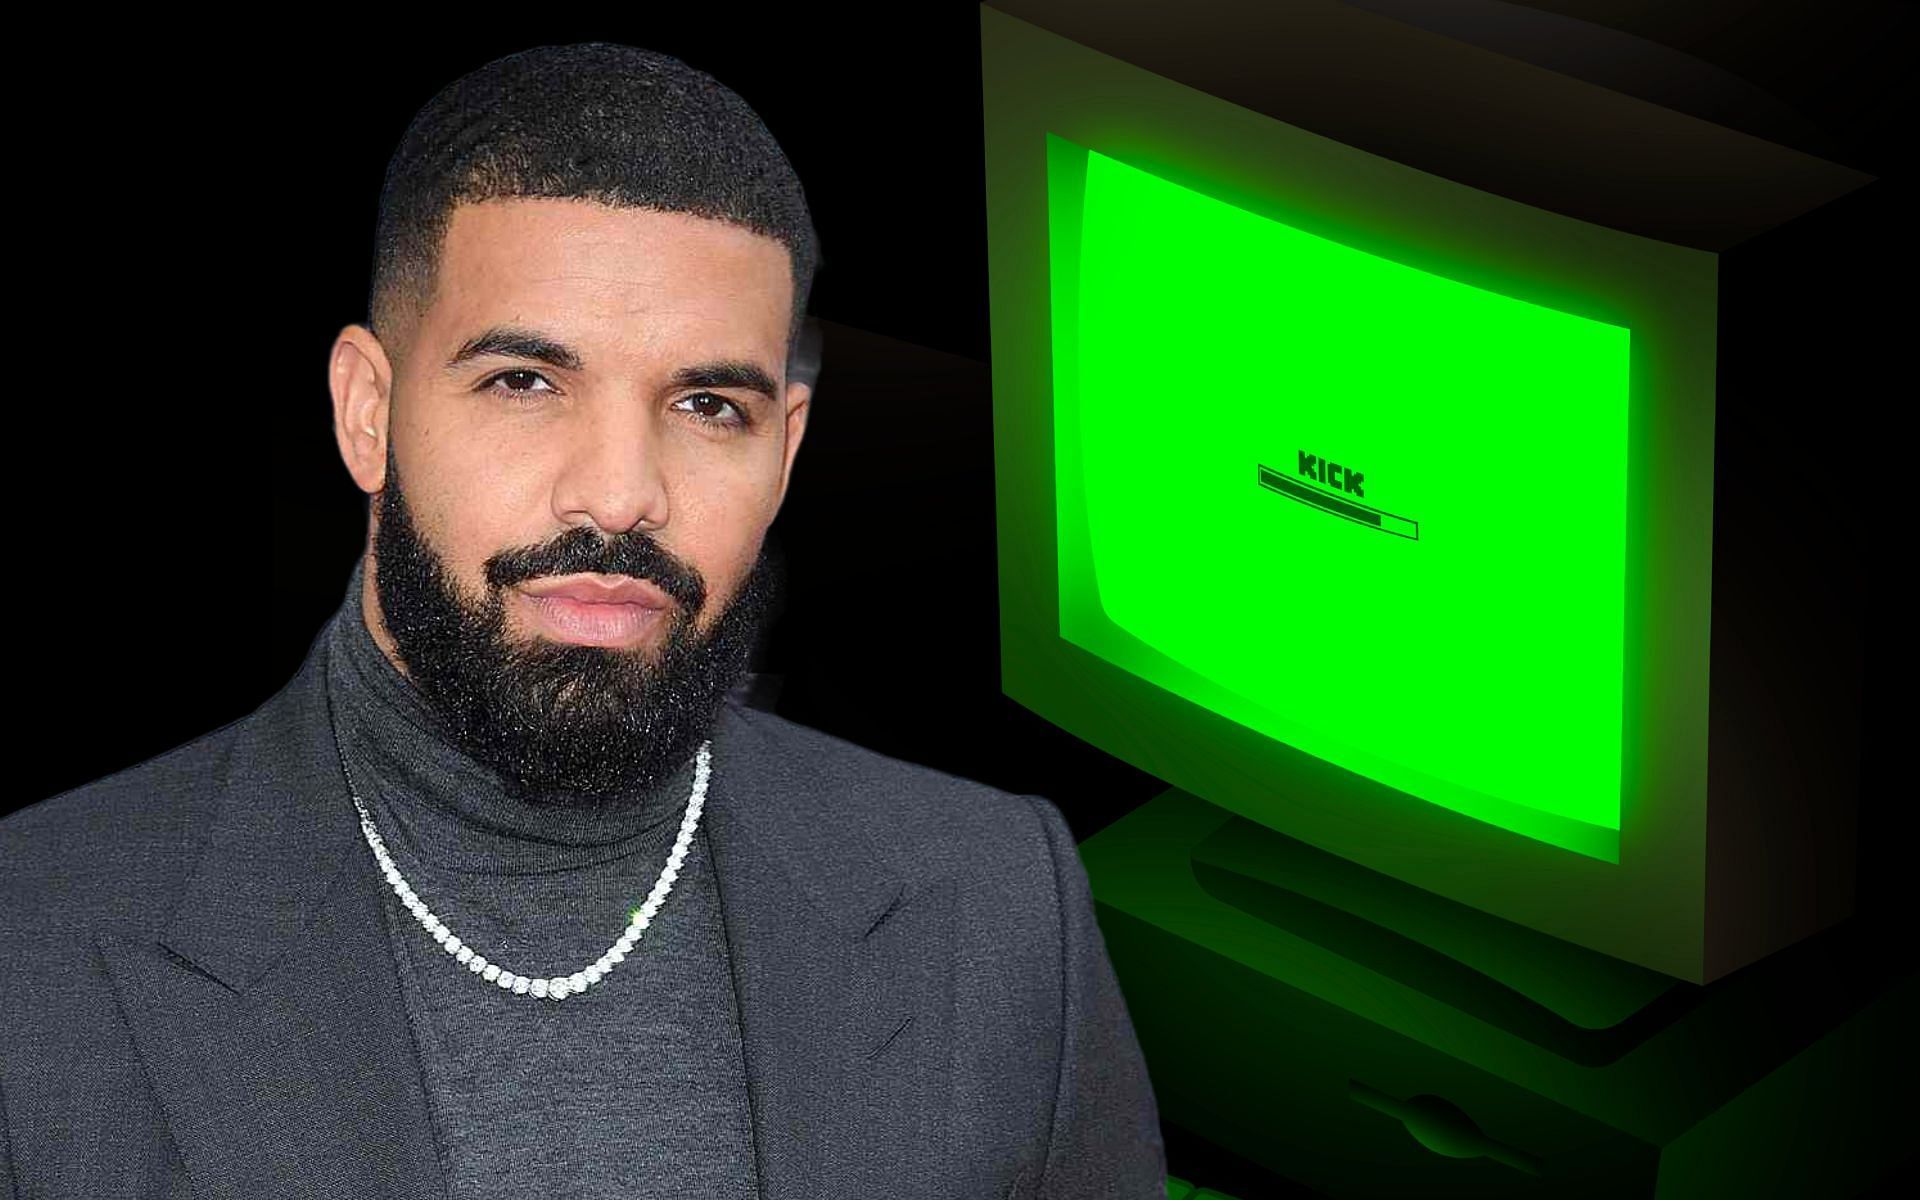 Drake went viral after his credit card seemingly got declined during his Kick livestream (Image via Sportskeeda)